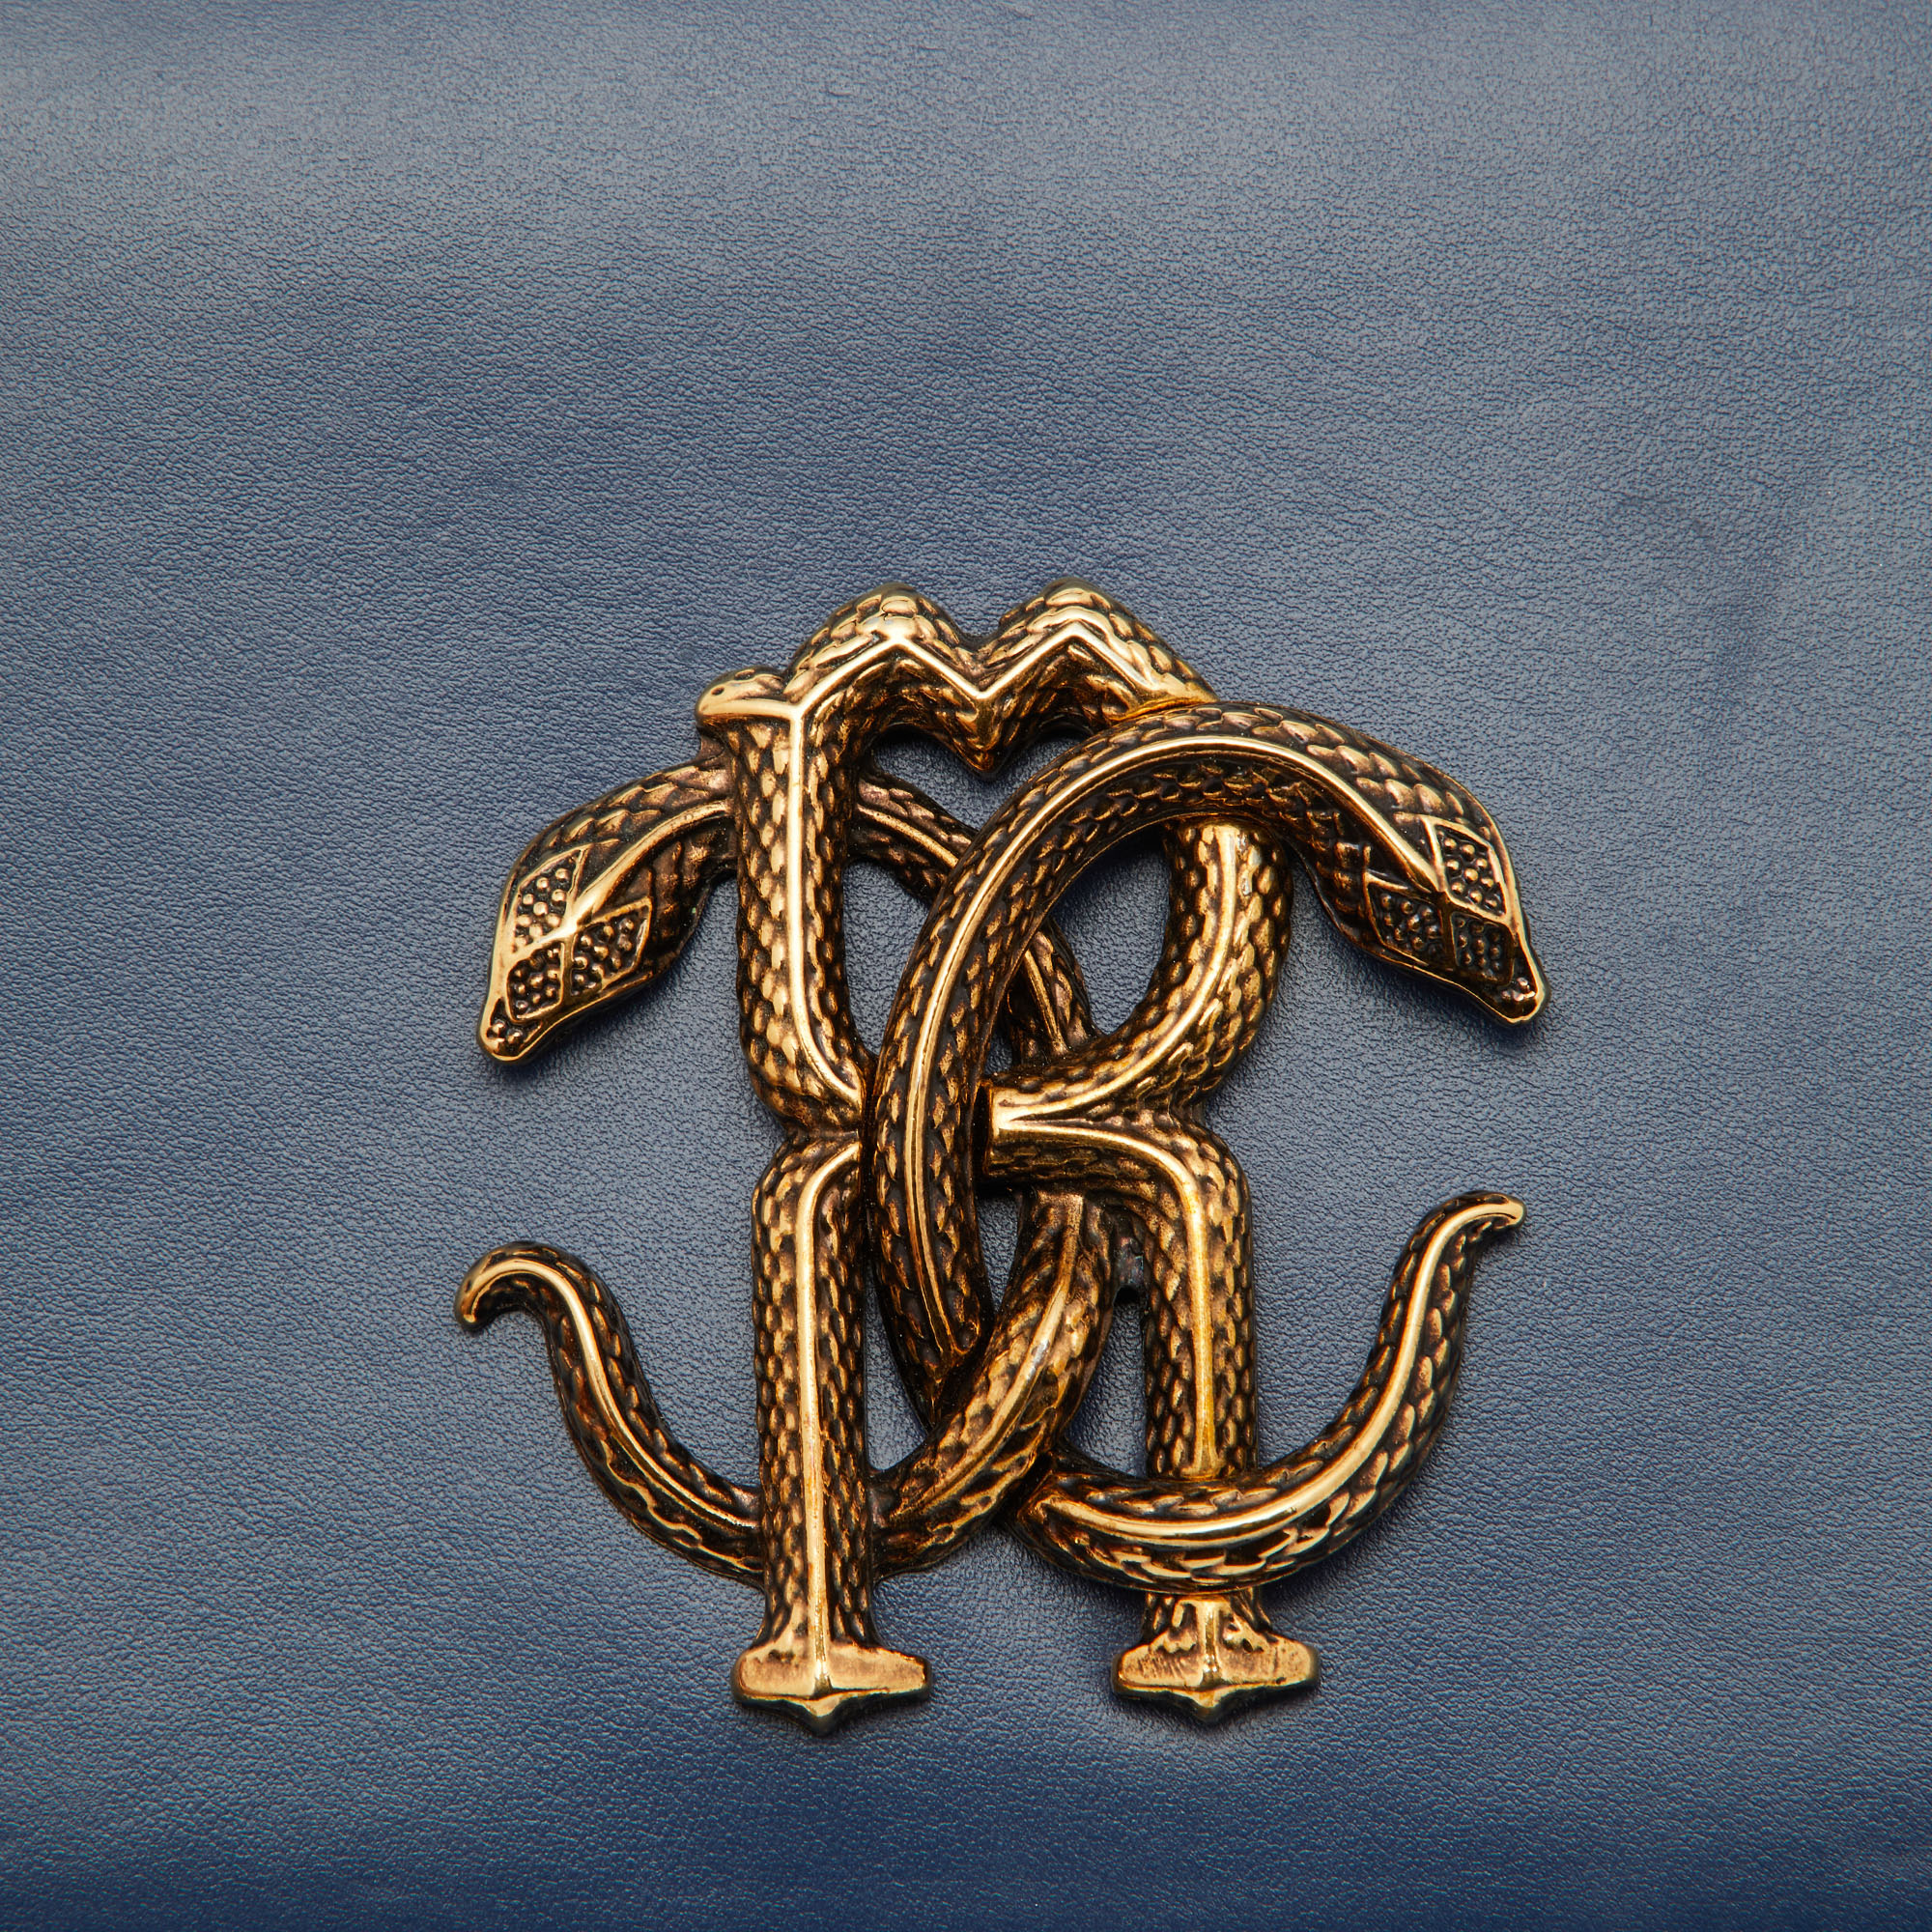 Roberto Cavalli Navy Blue Leather RC Monogram Flap Chain Bag